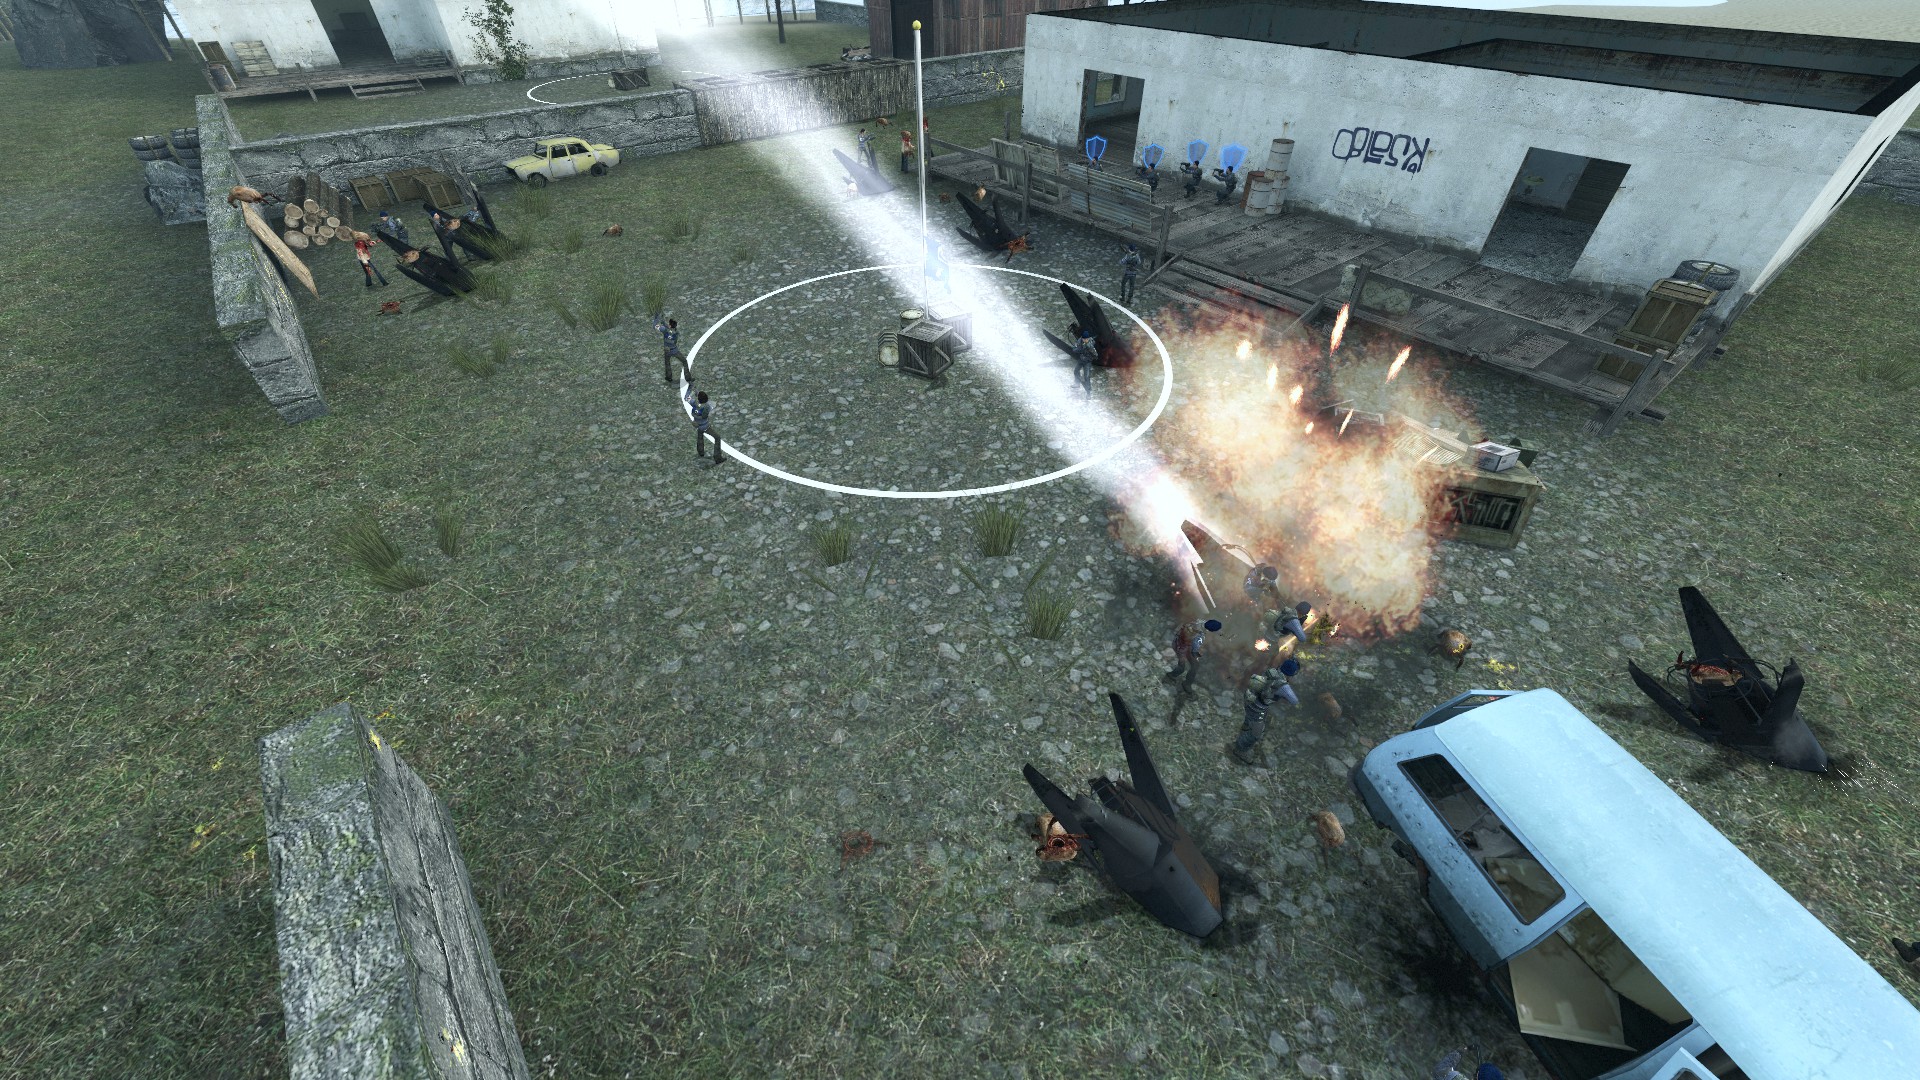 An image from the half-life 2 RTS mod Lambda Wars